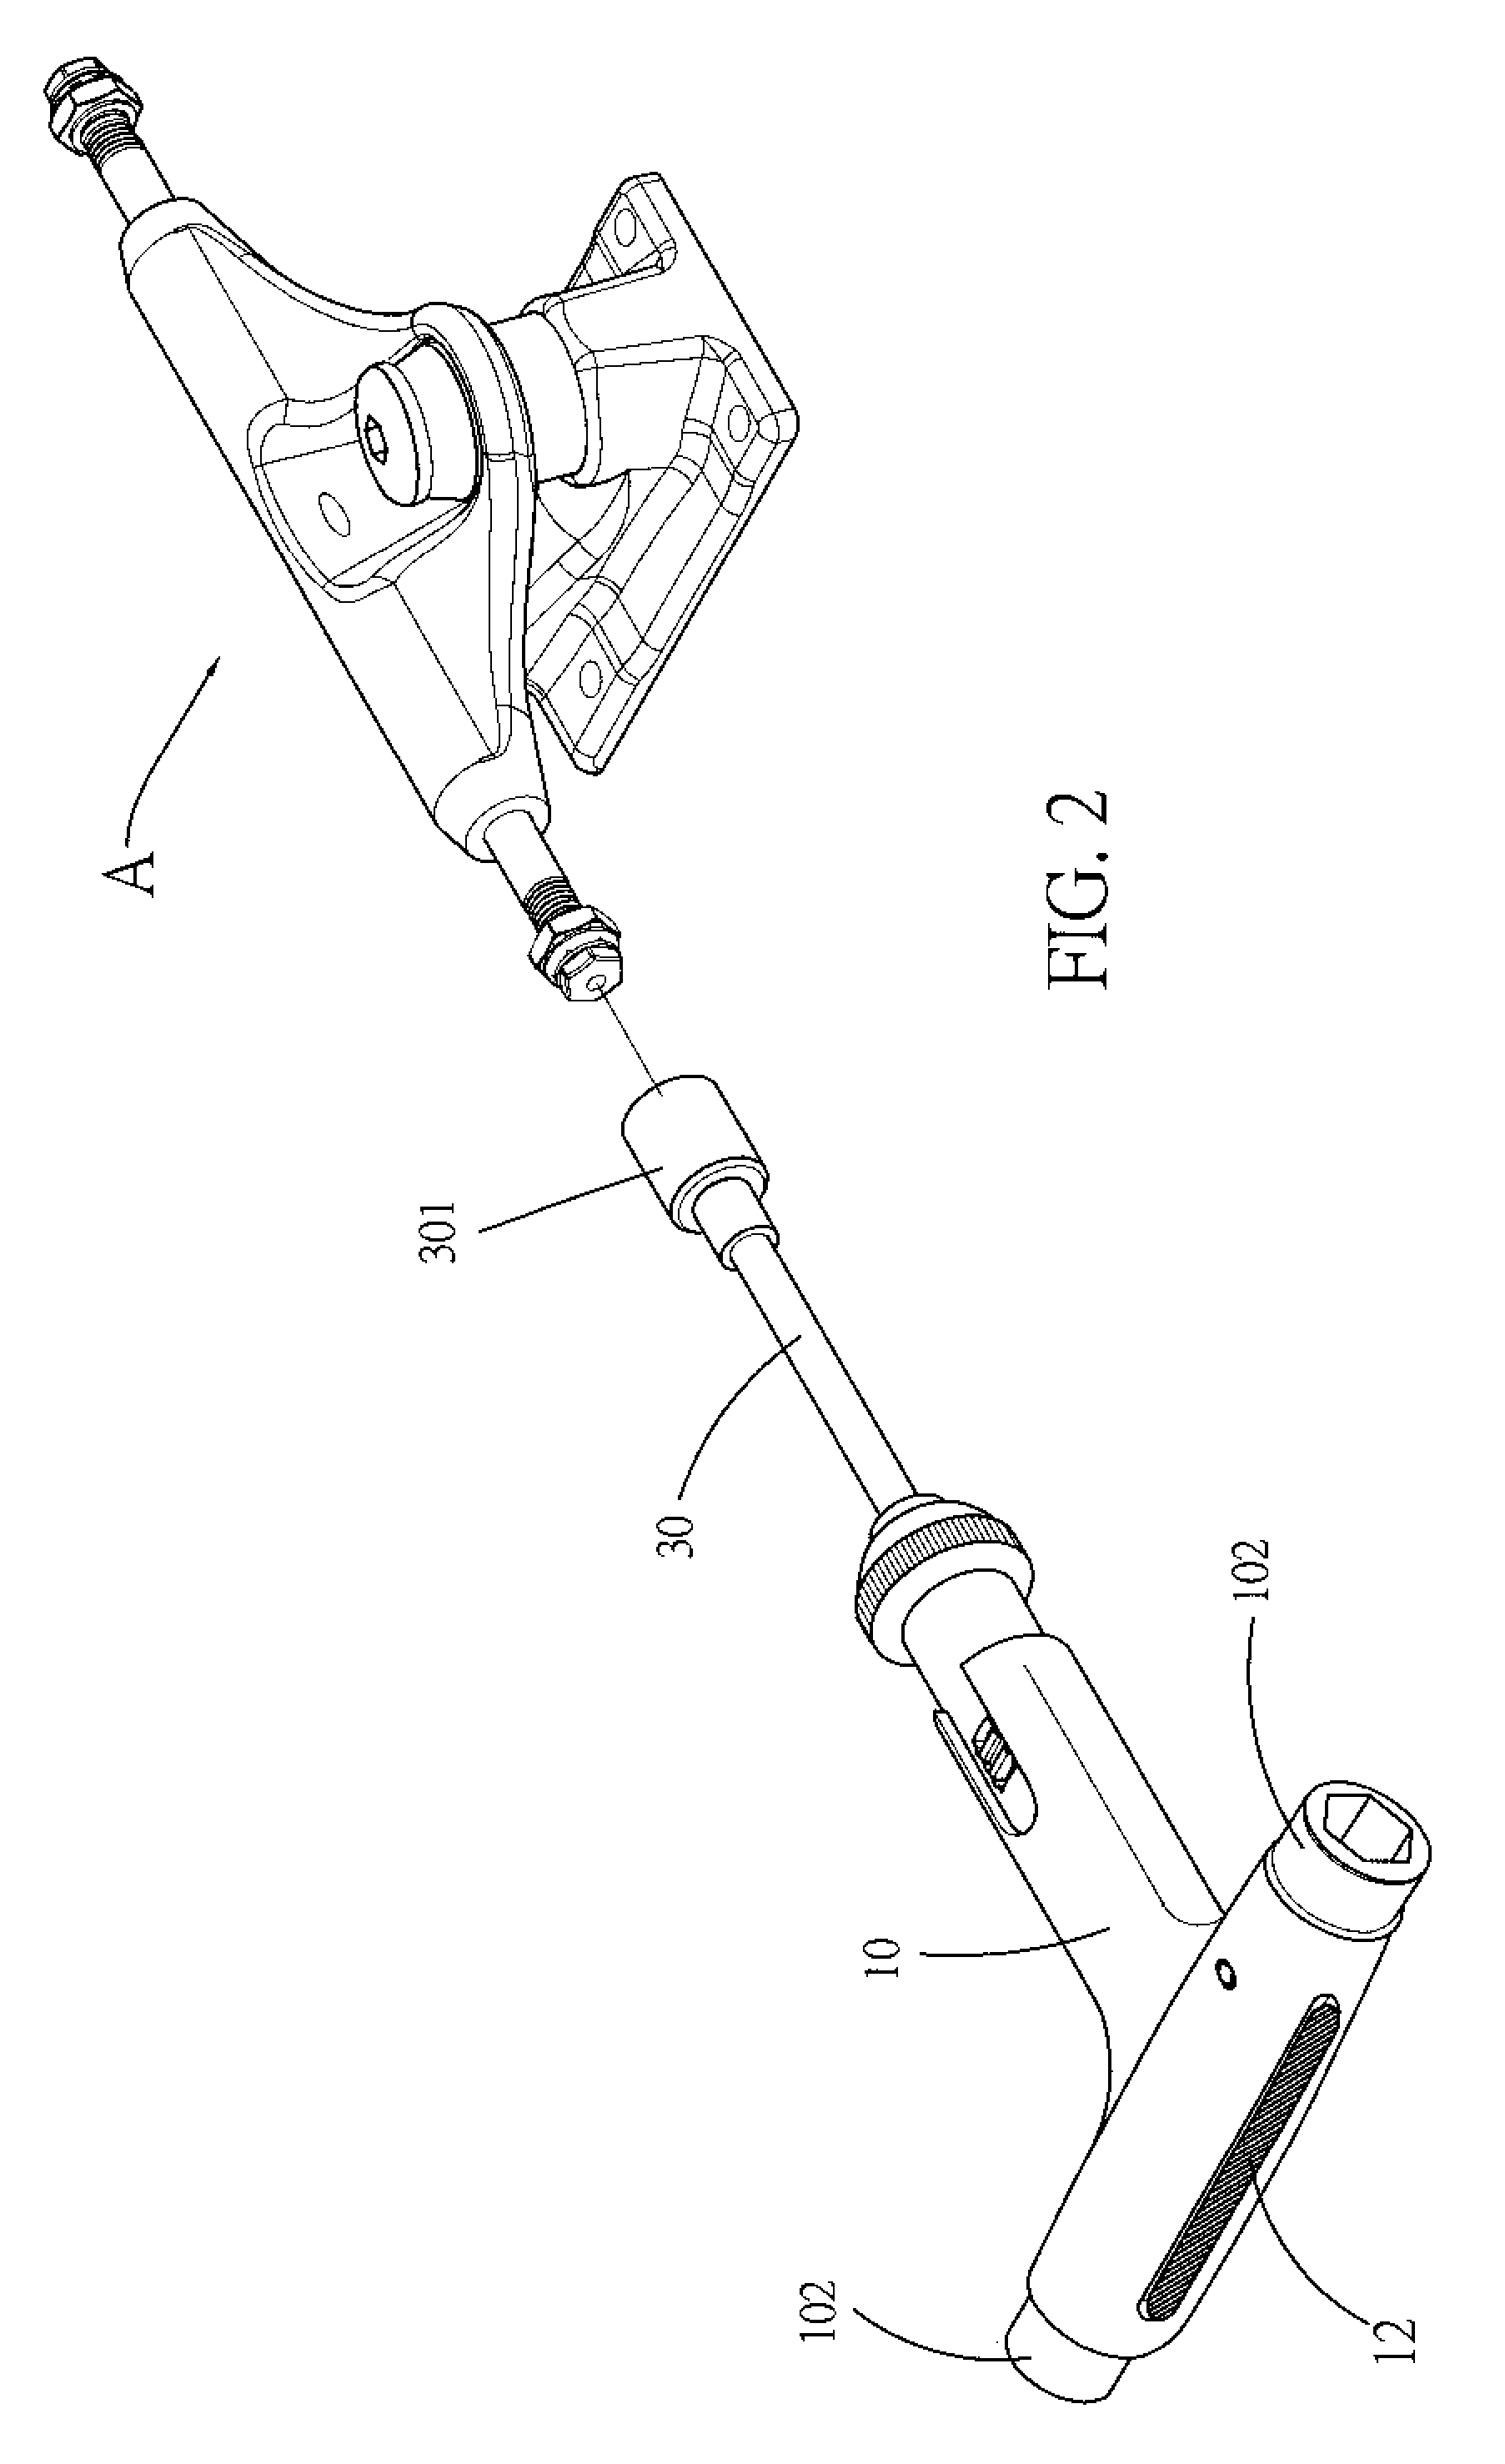 Reversible socket wrench